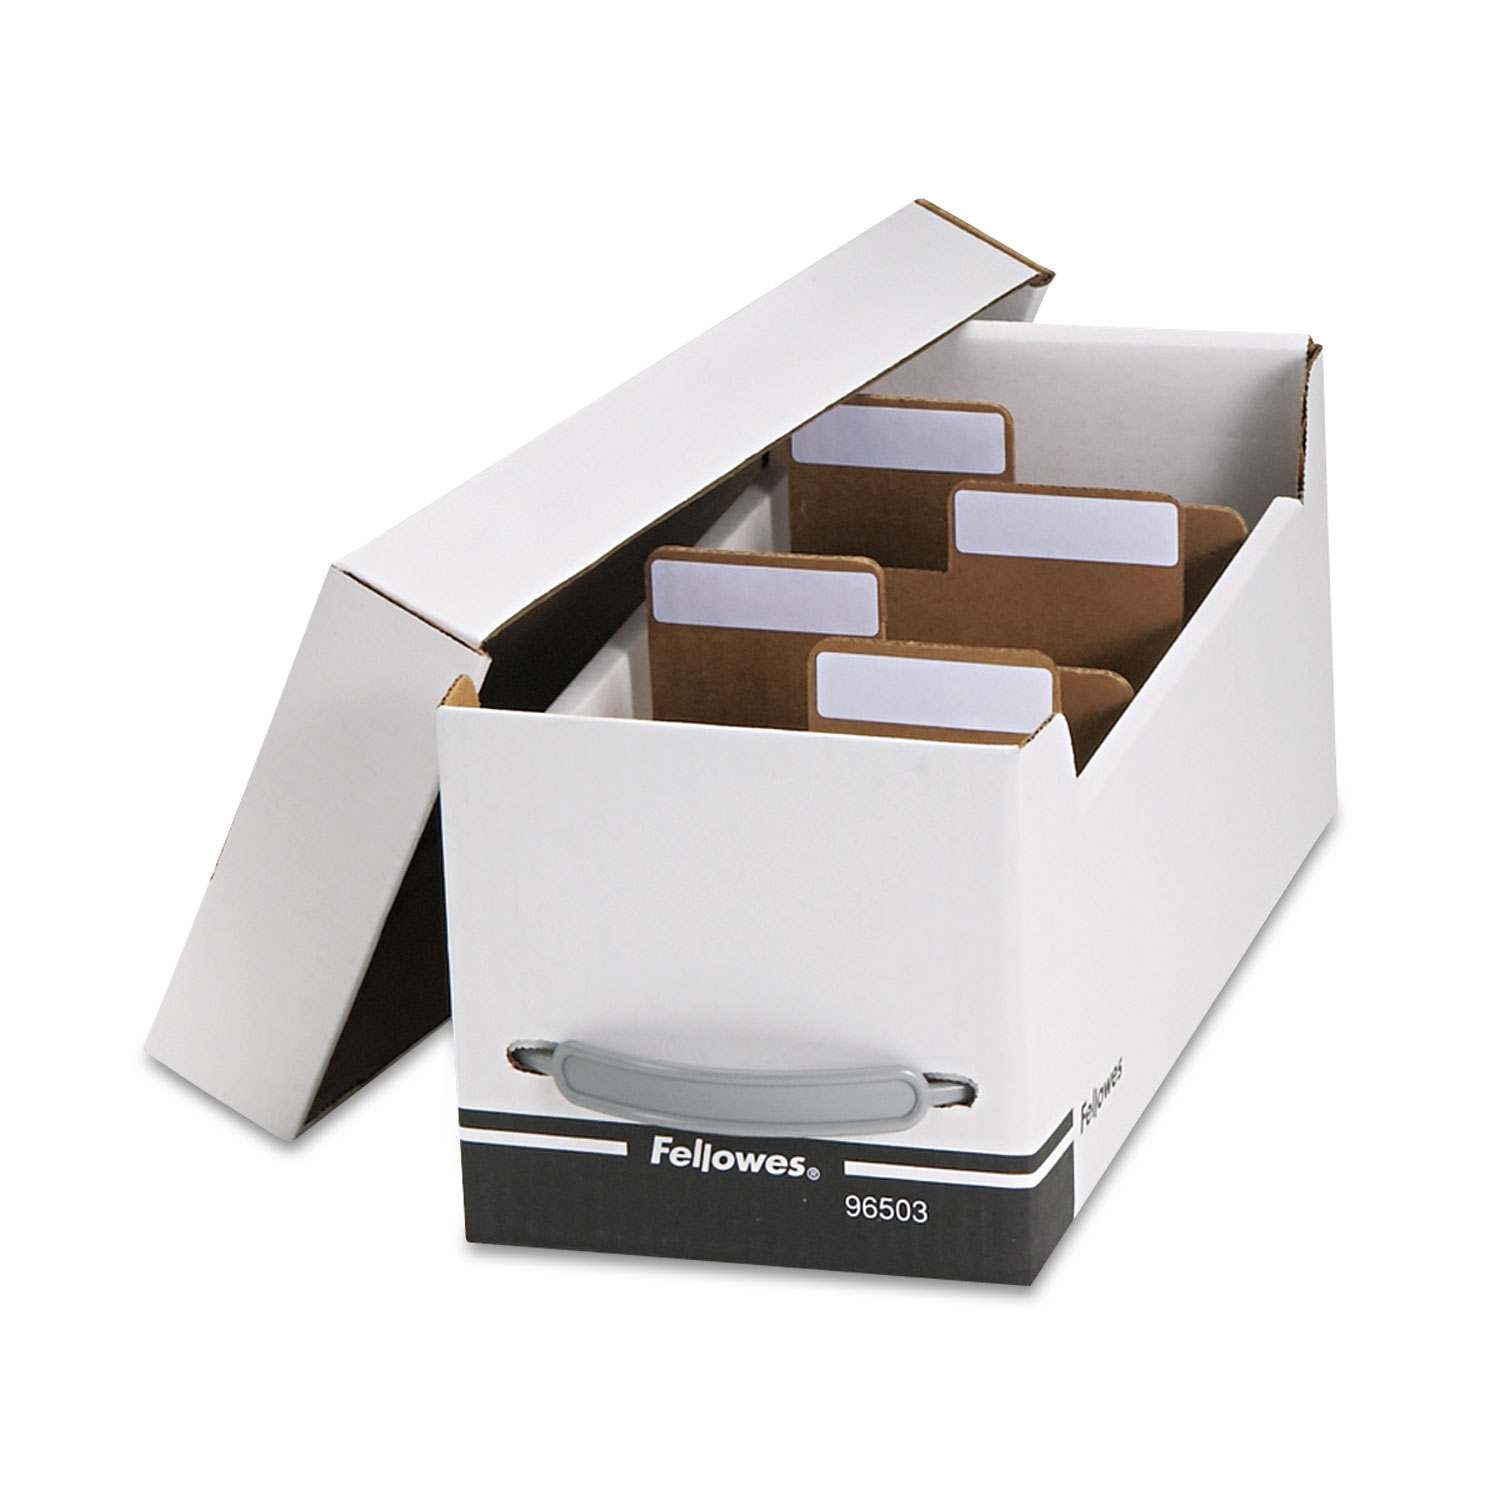  Fellowes 96503 Corrugated Media File, Holds 125 Diskettes/35 Standard Cases, White/Black (FEL96503) 